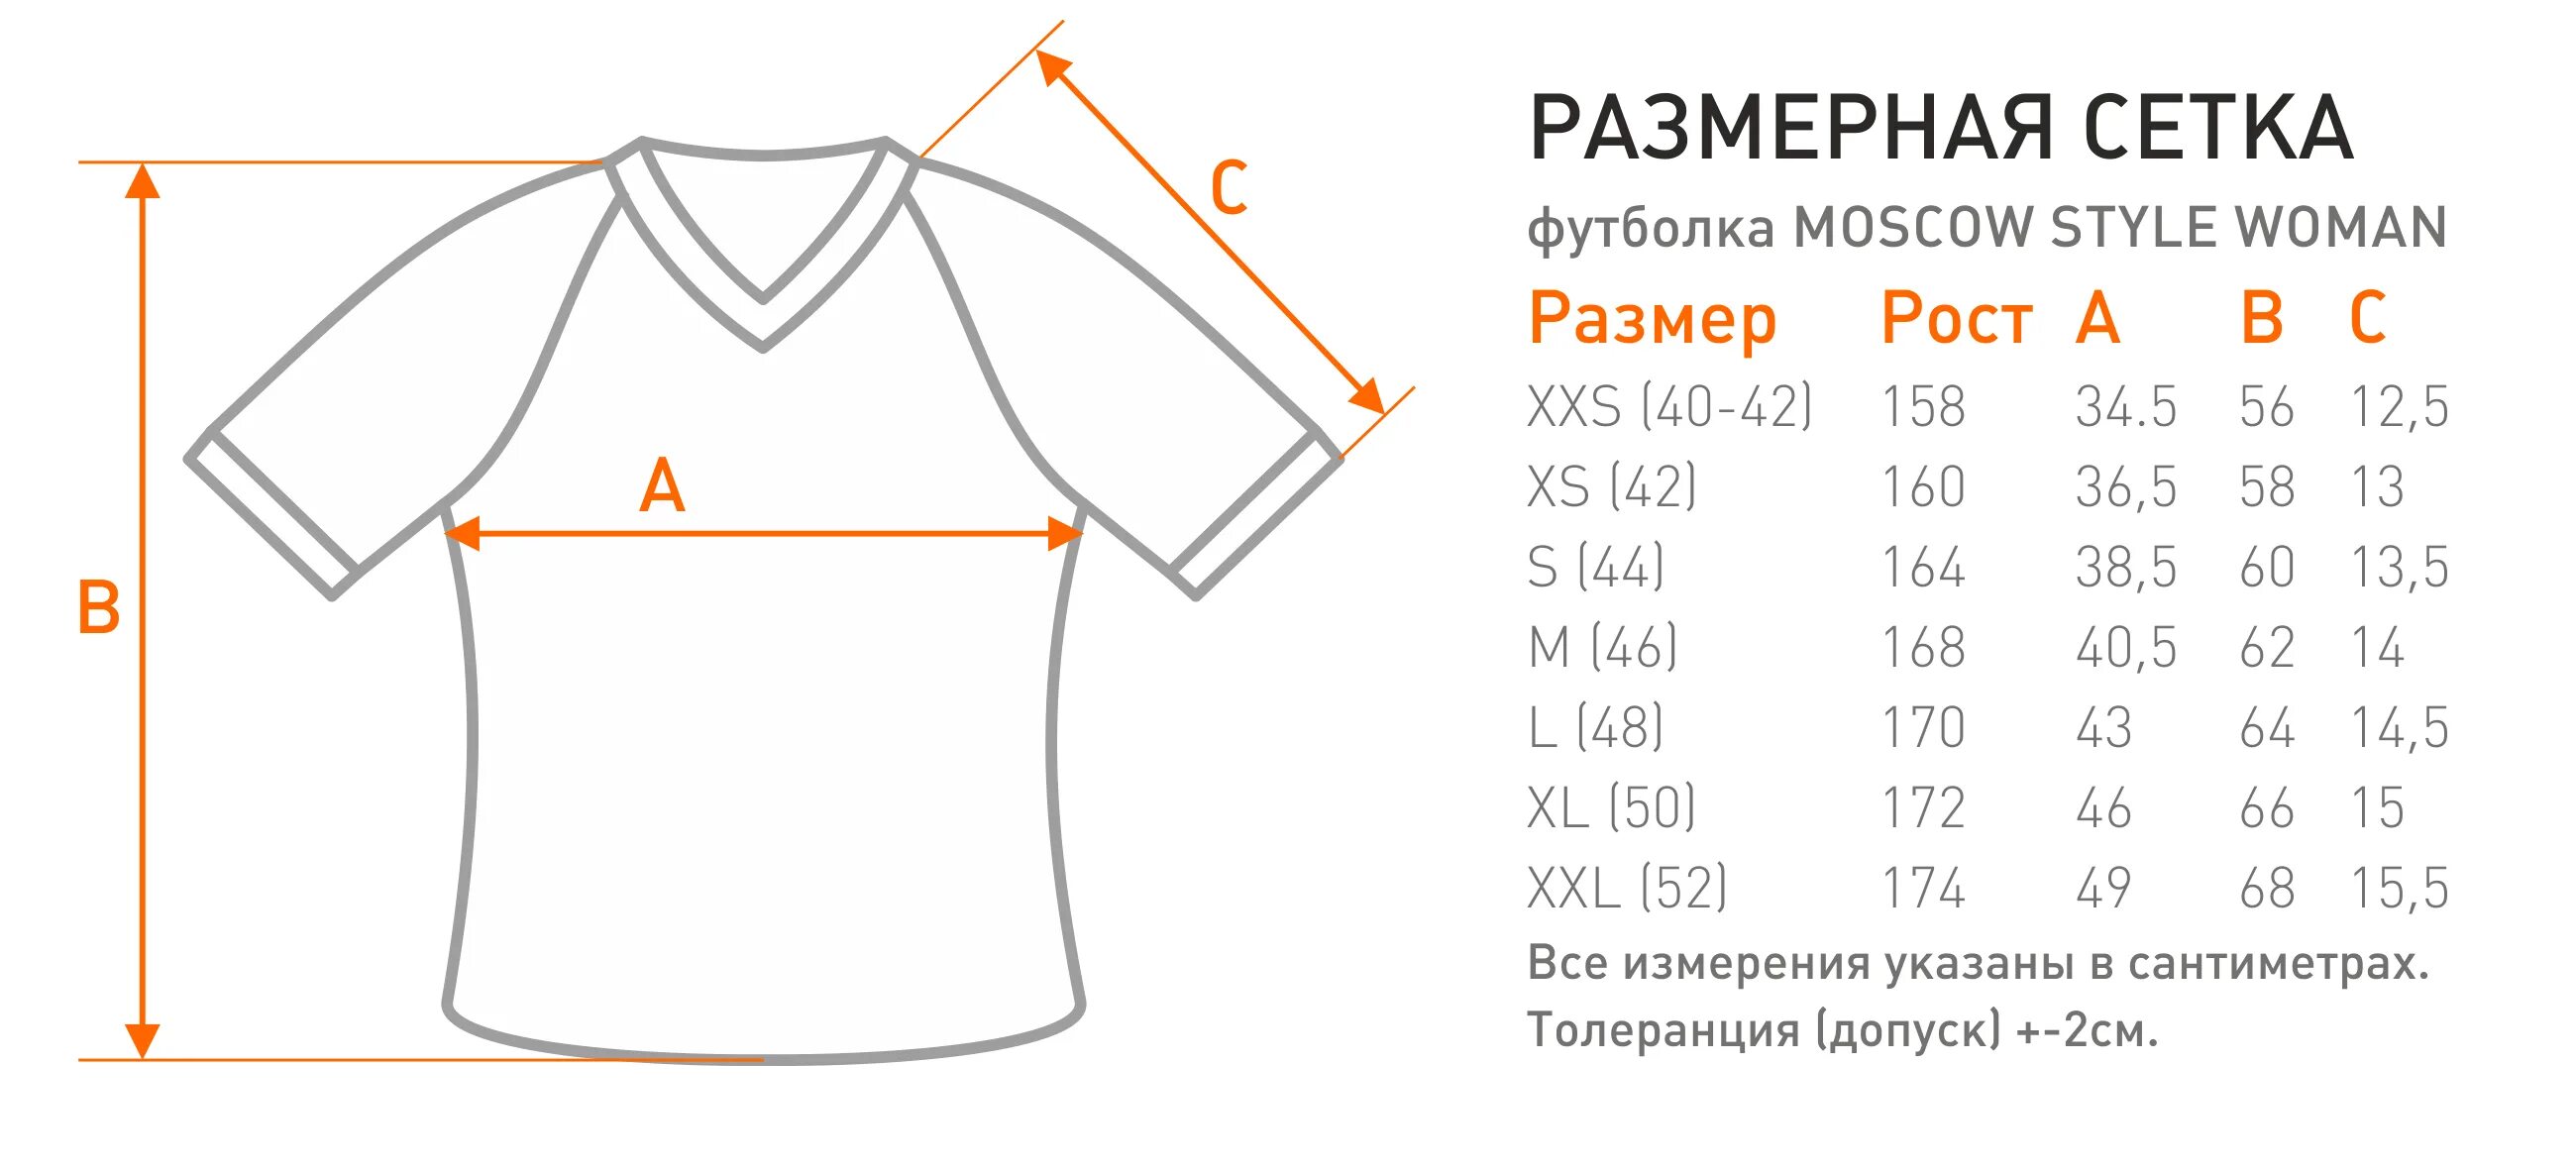 Футболка s m размеры. Размеры футболок. Таблица размеров футболок. Размеры футболок в сантиметрах. Таблица размеров футболок для женщин.